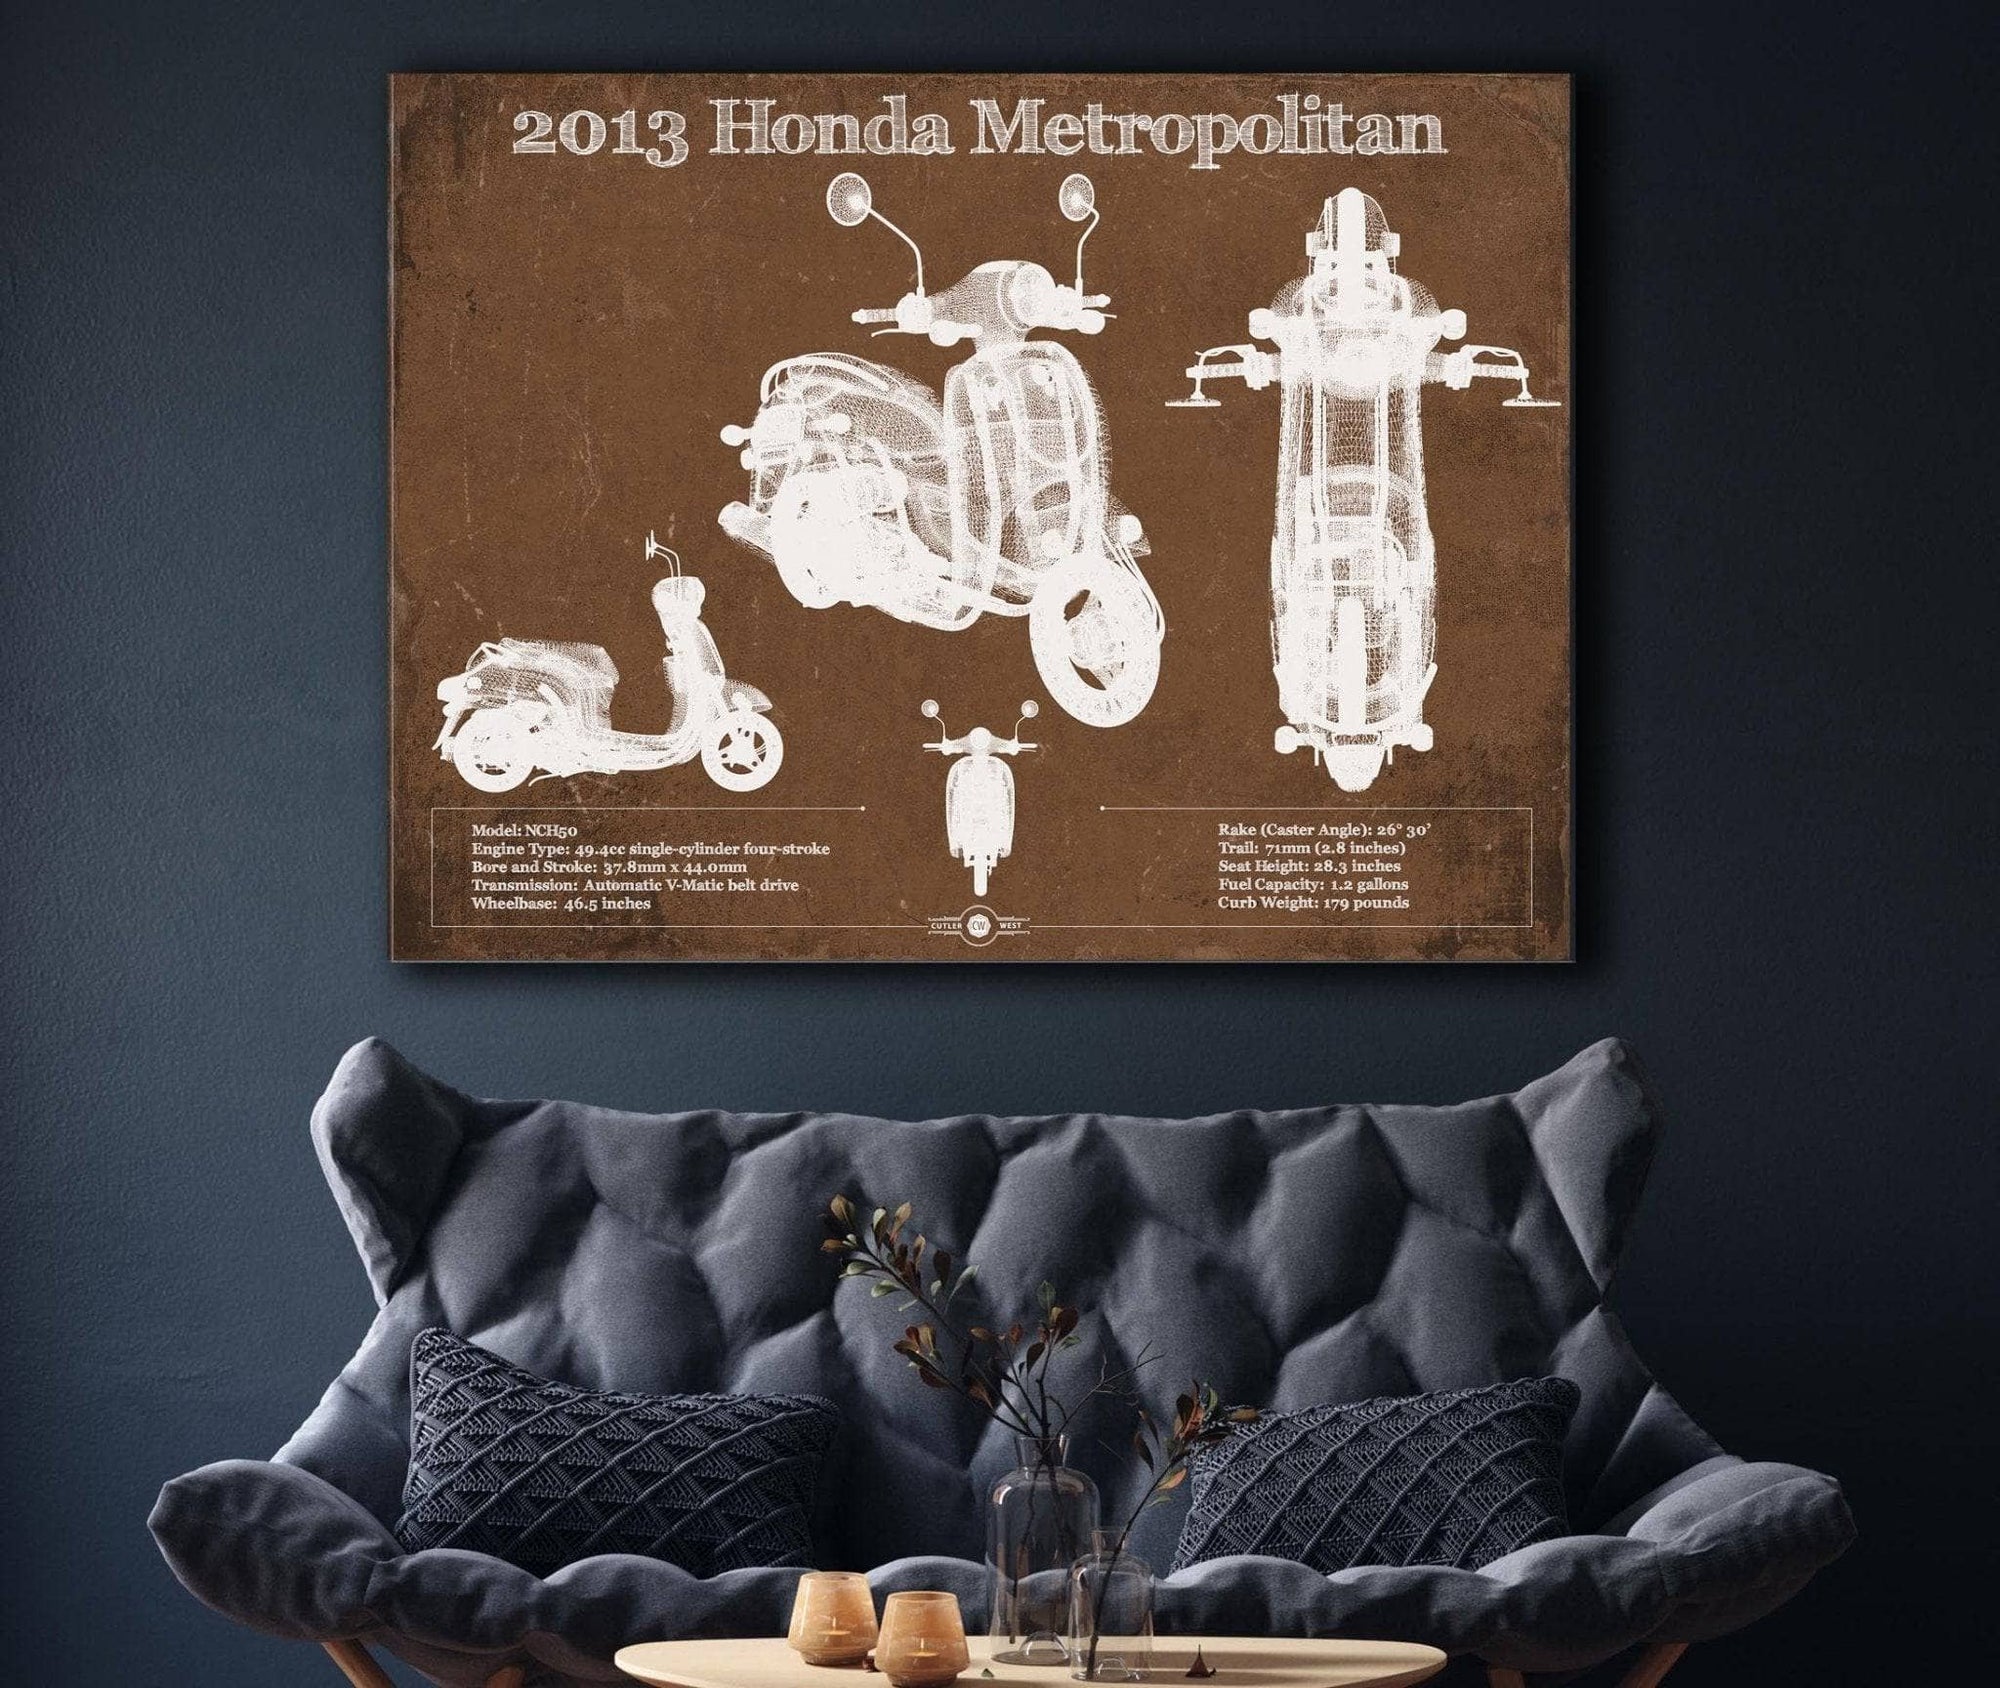 Cutler West Vehicle Collection 2013 Honda Metropolitan Vintage Blueprint Auto Print